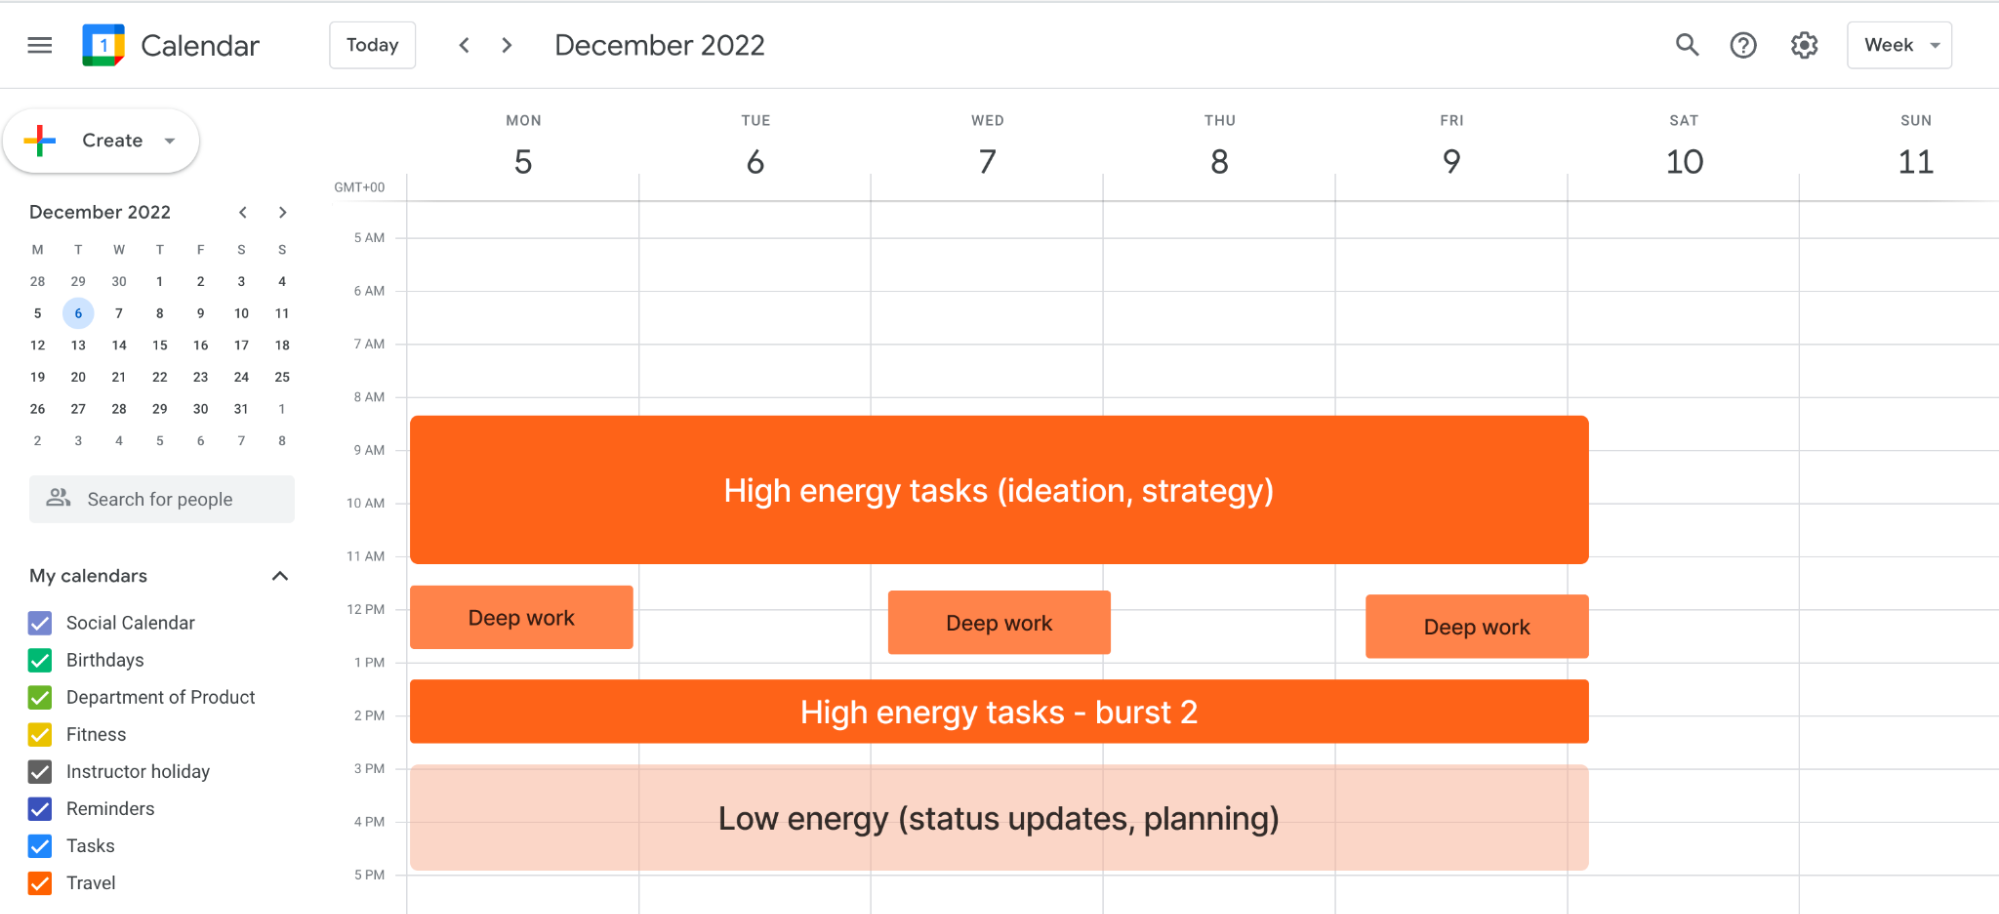 calendar based on energy